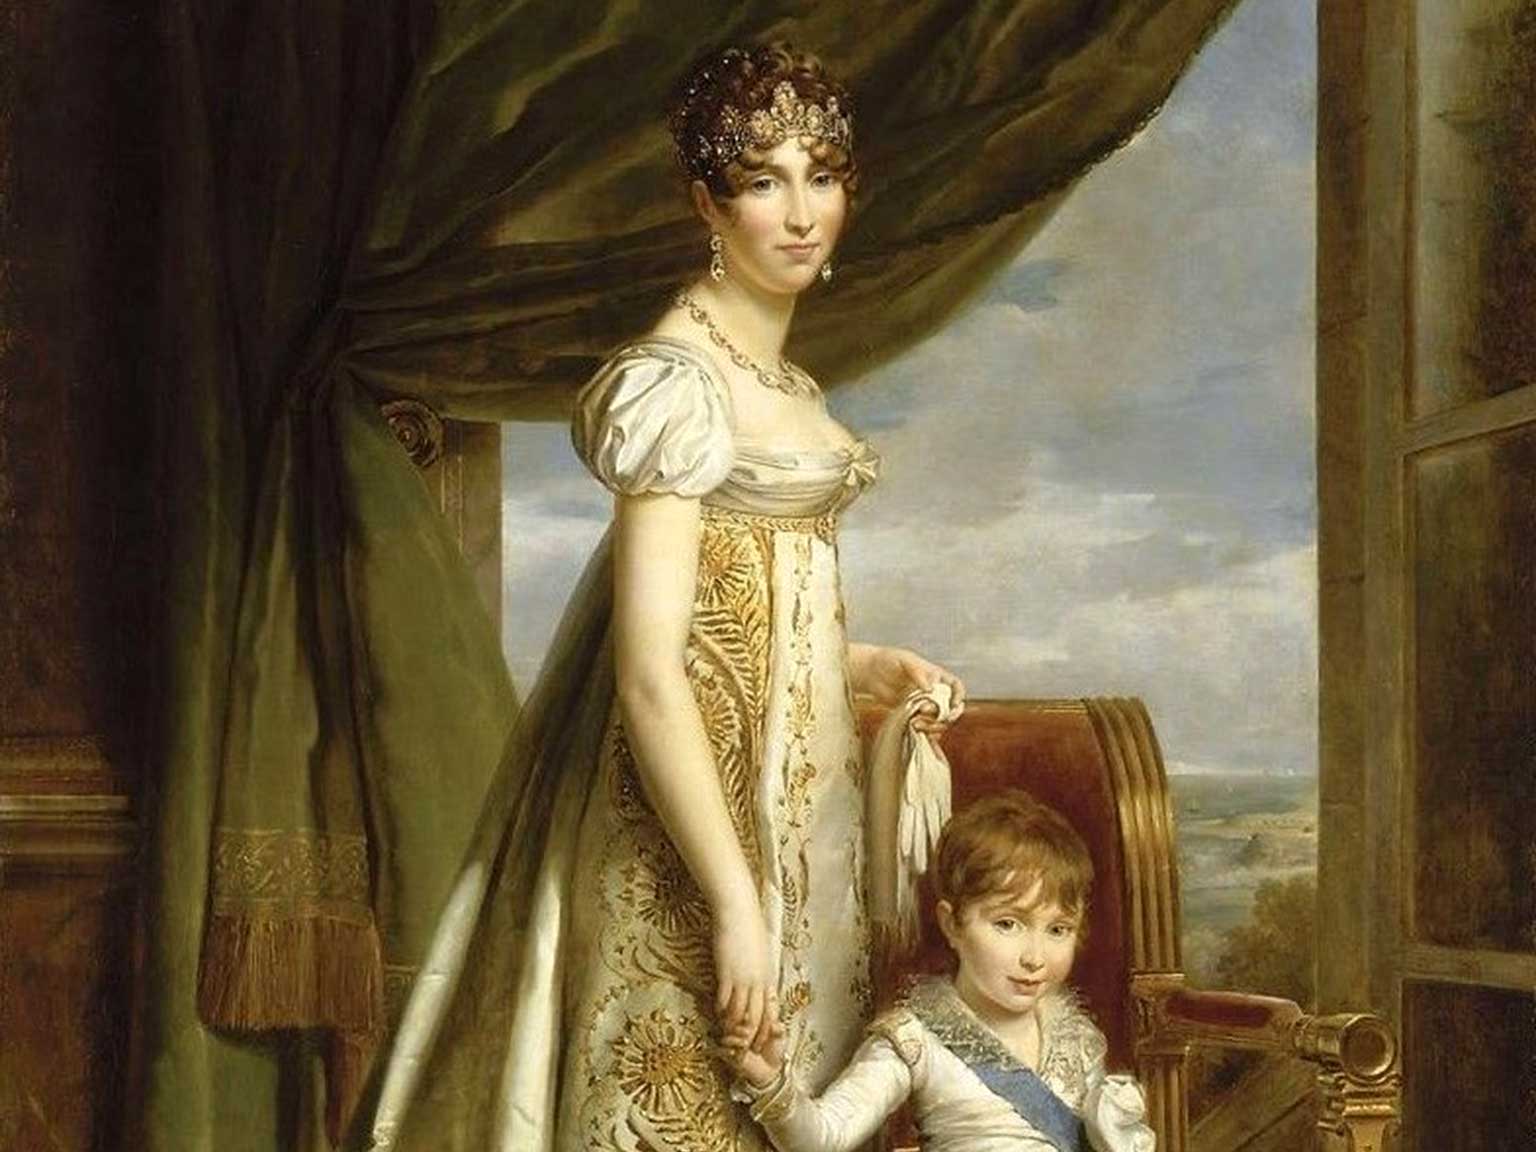 Hortense de Beauharnais with her son Napoléon-Louis in 1807, painting by François Gérard